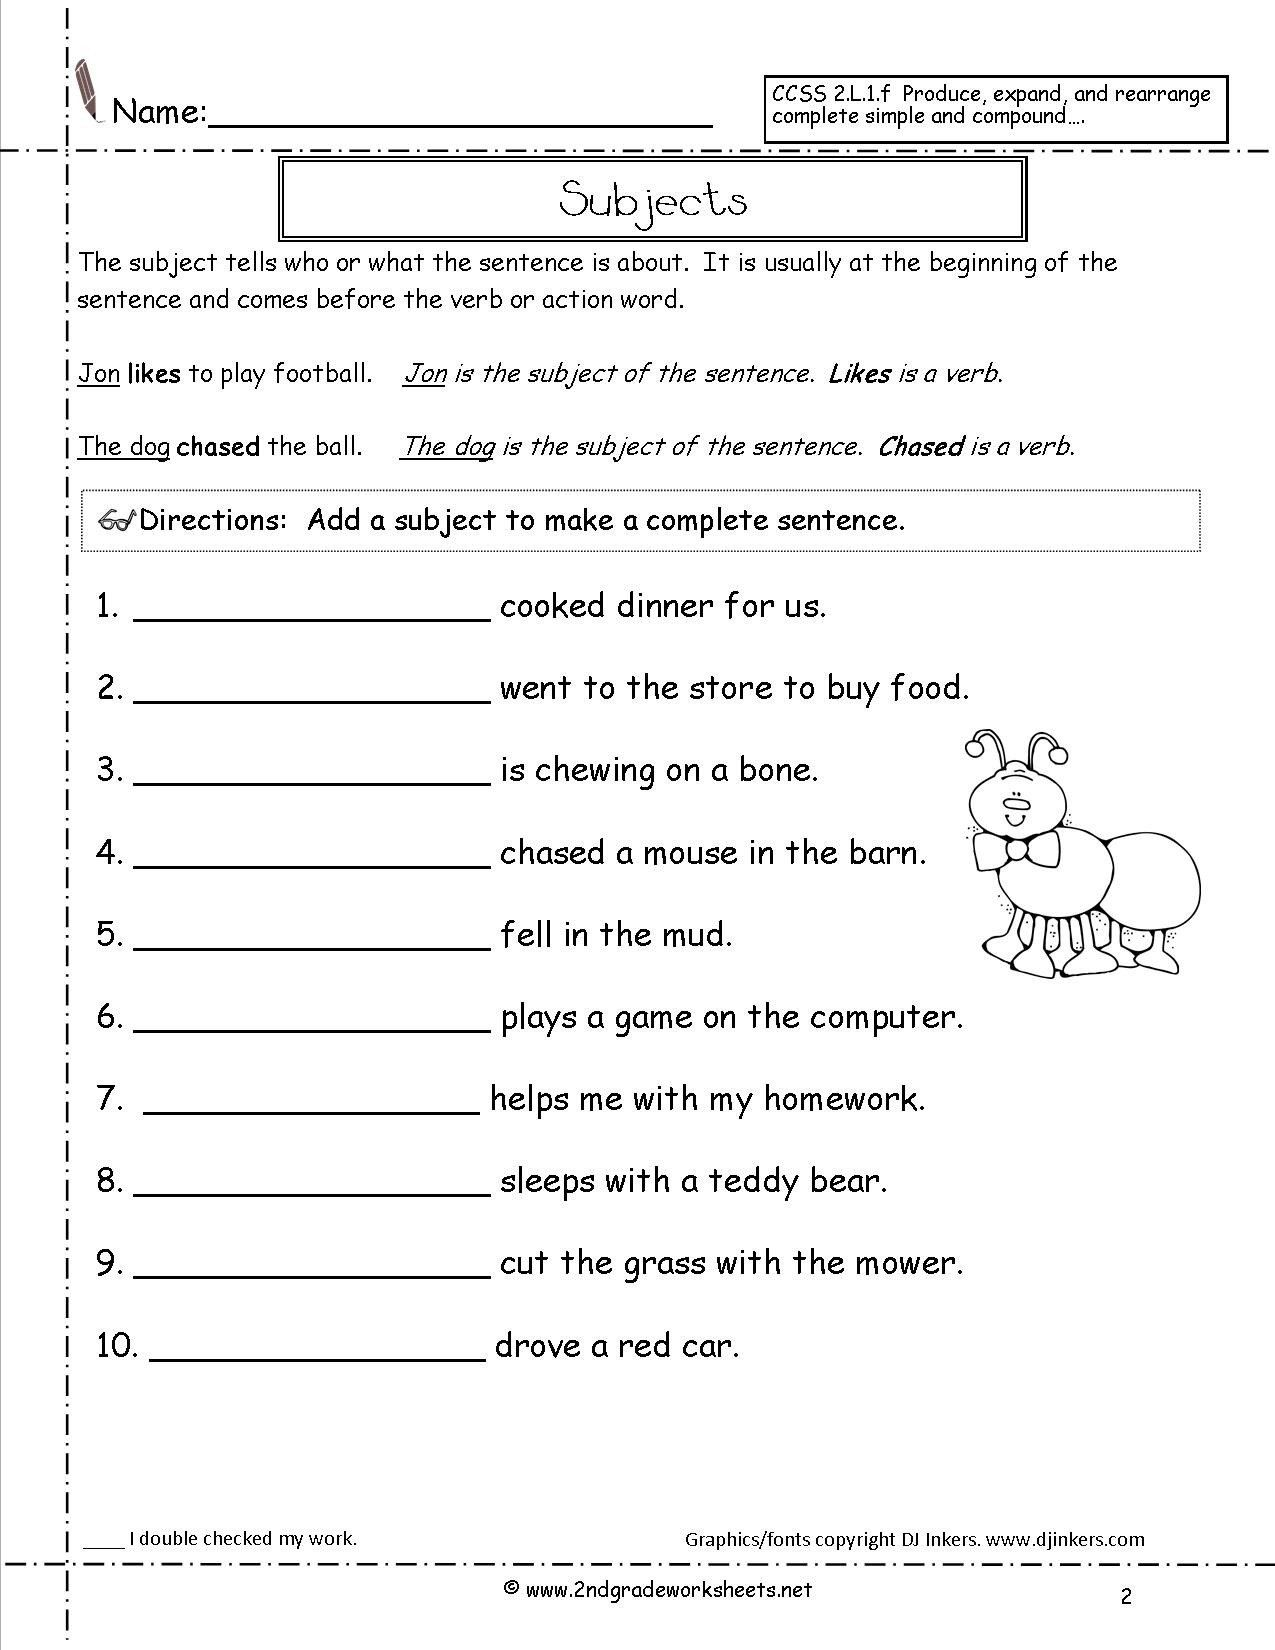 answering-in-complete-sentences-worksheet-unique-second-grade-sentences